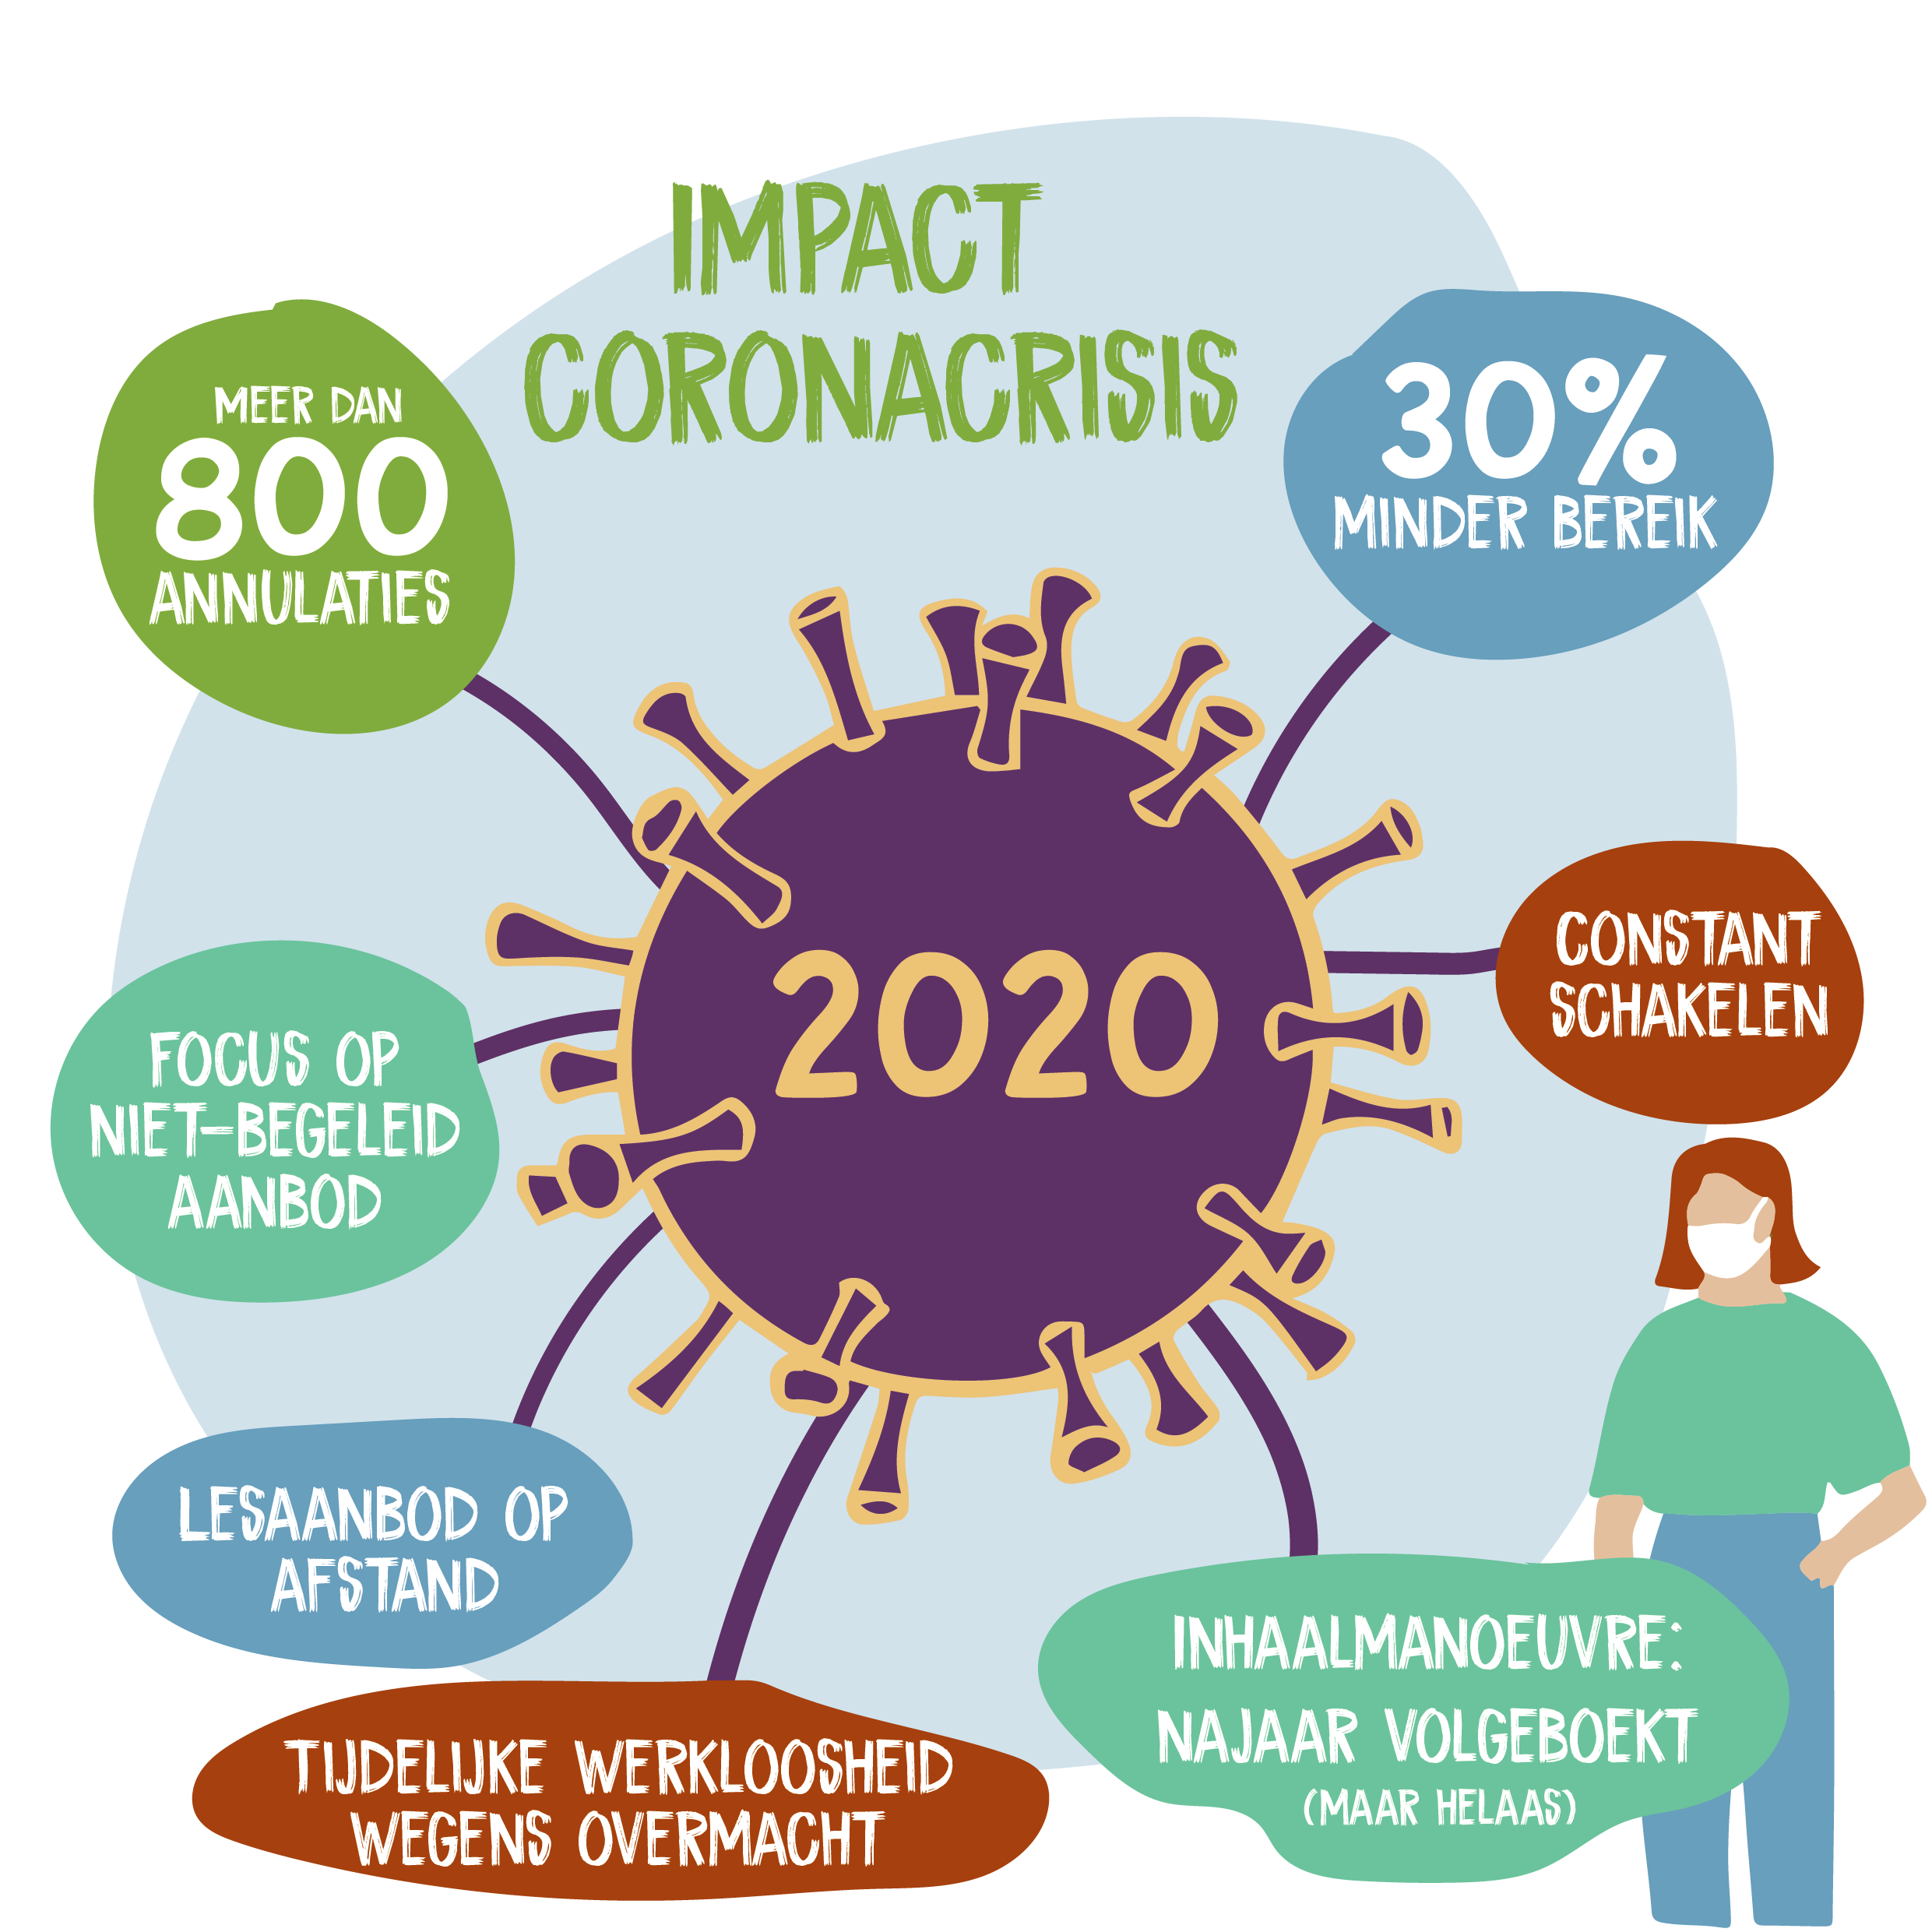 jaarverslag 2020 corona impact